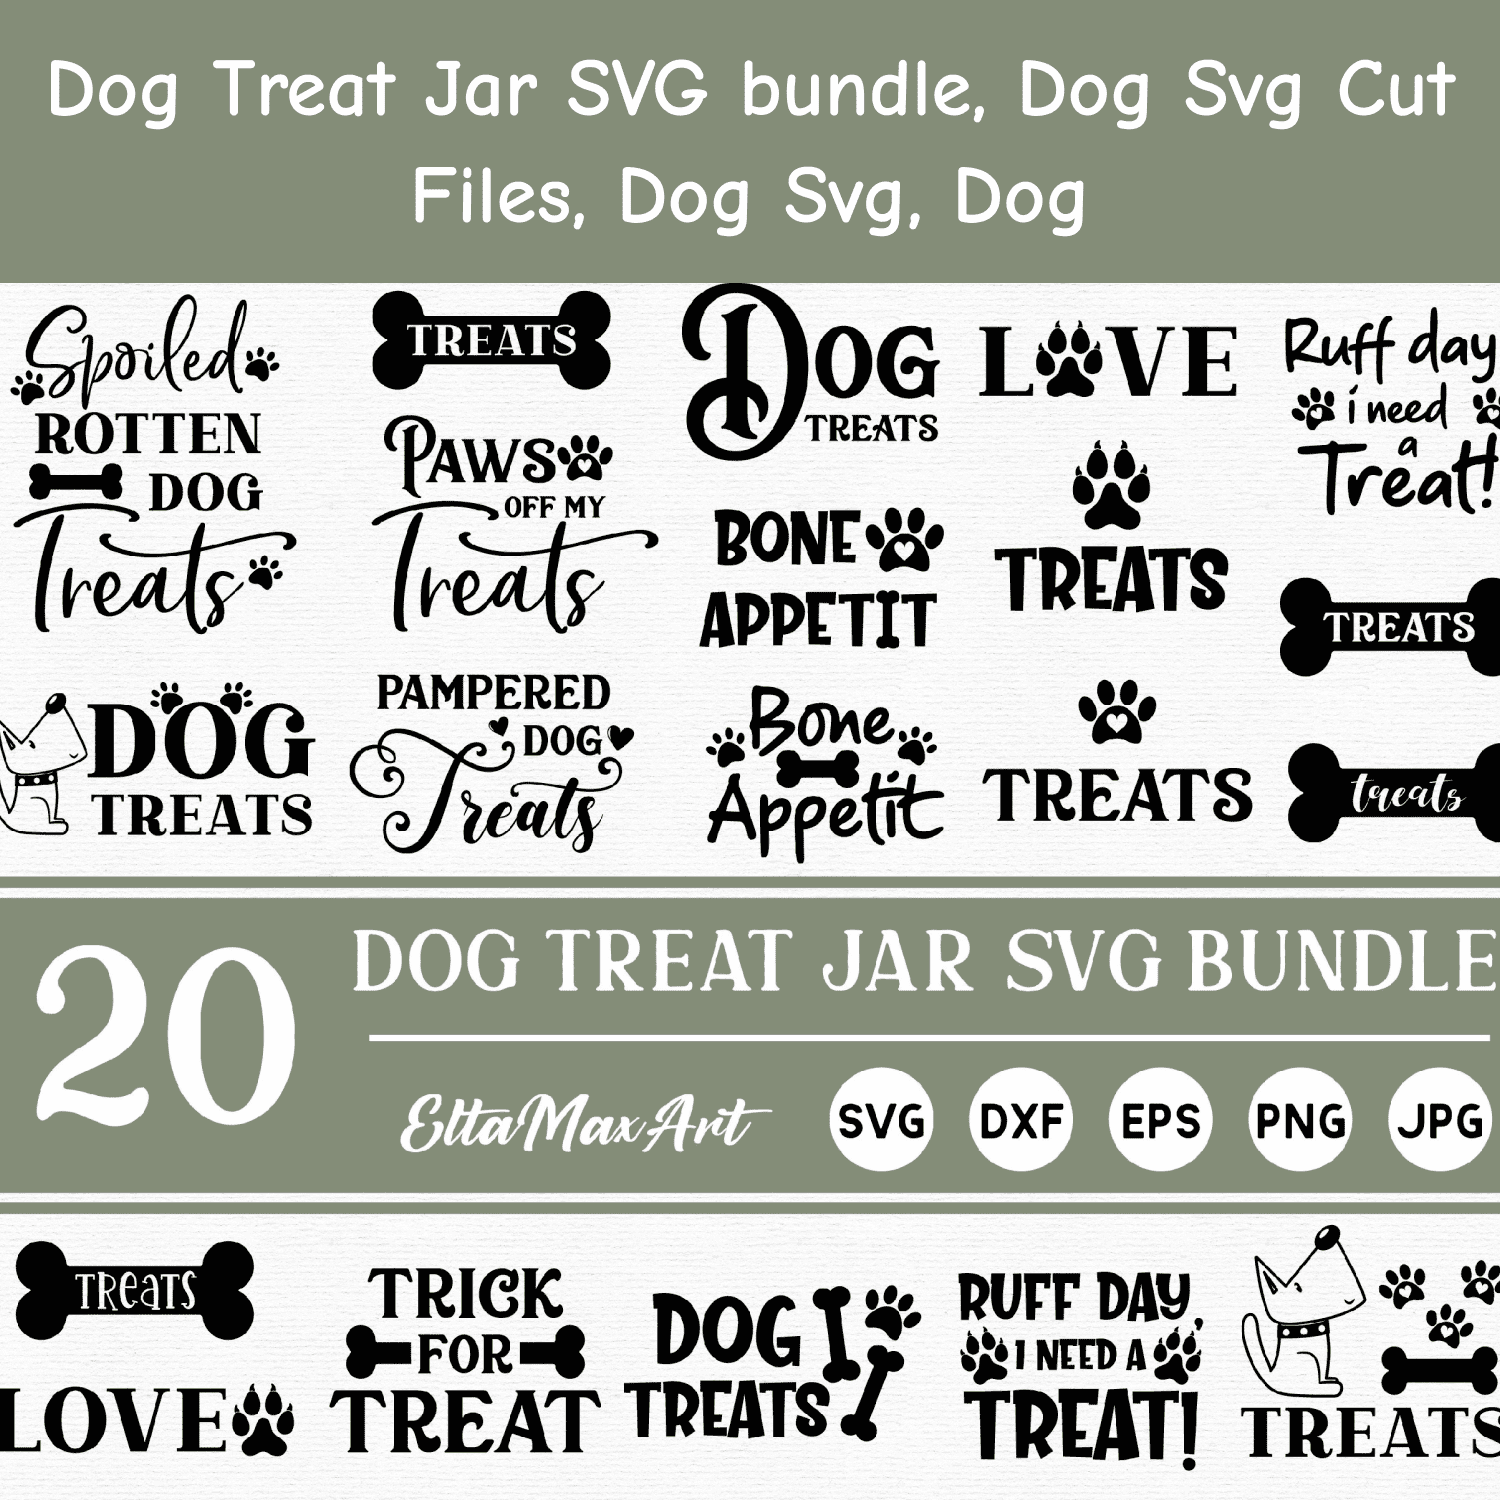 Dog Treat Jar SVG bundle, Dog Svg Cut Files, Dog Svg, Dog main cover.